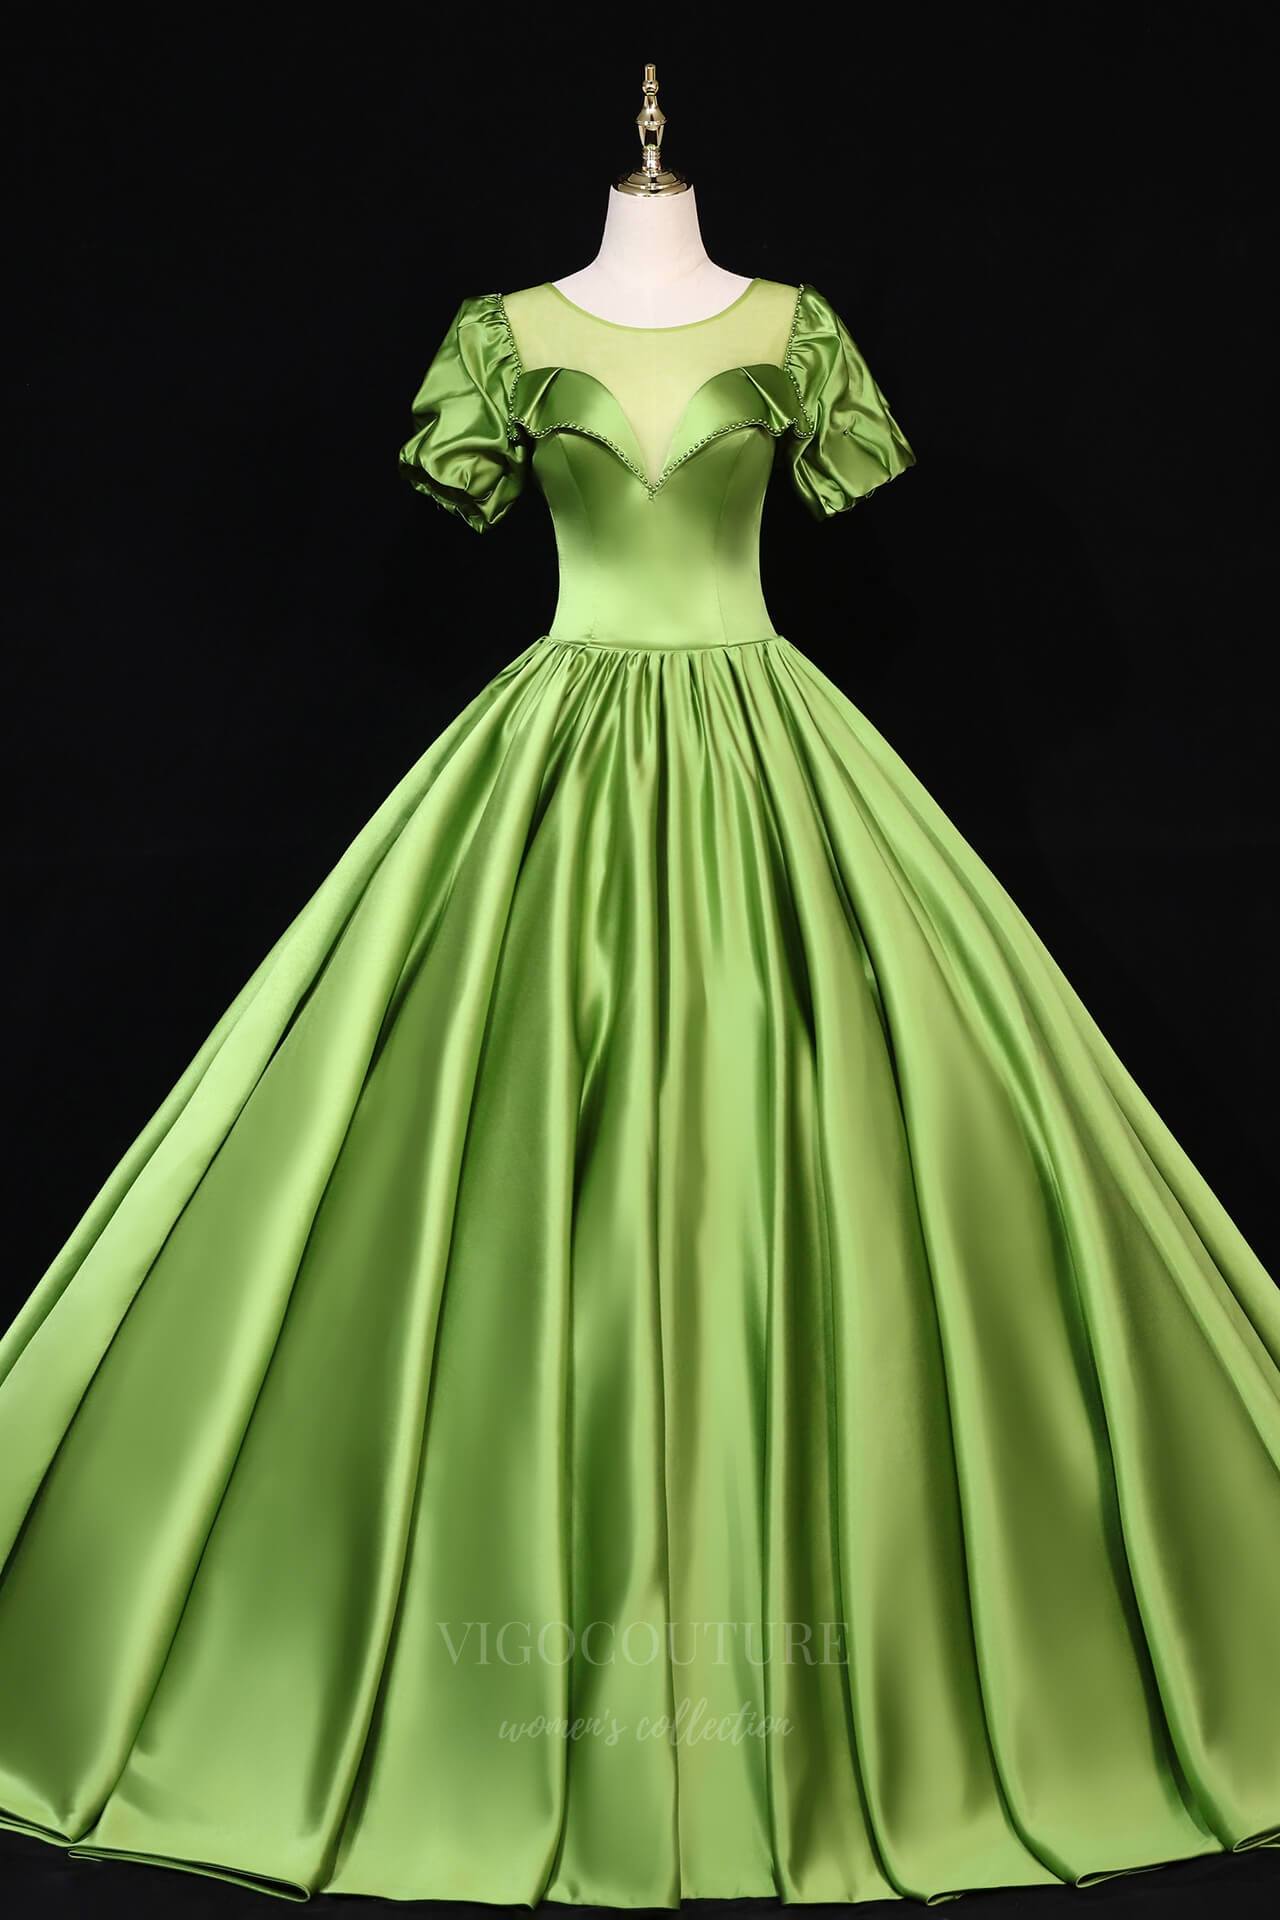 vigocouture-Puffed Sleeve Round Neck Prom Dress 20686-Prom Dresses-vigocouture-Green-US2-